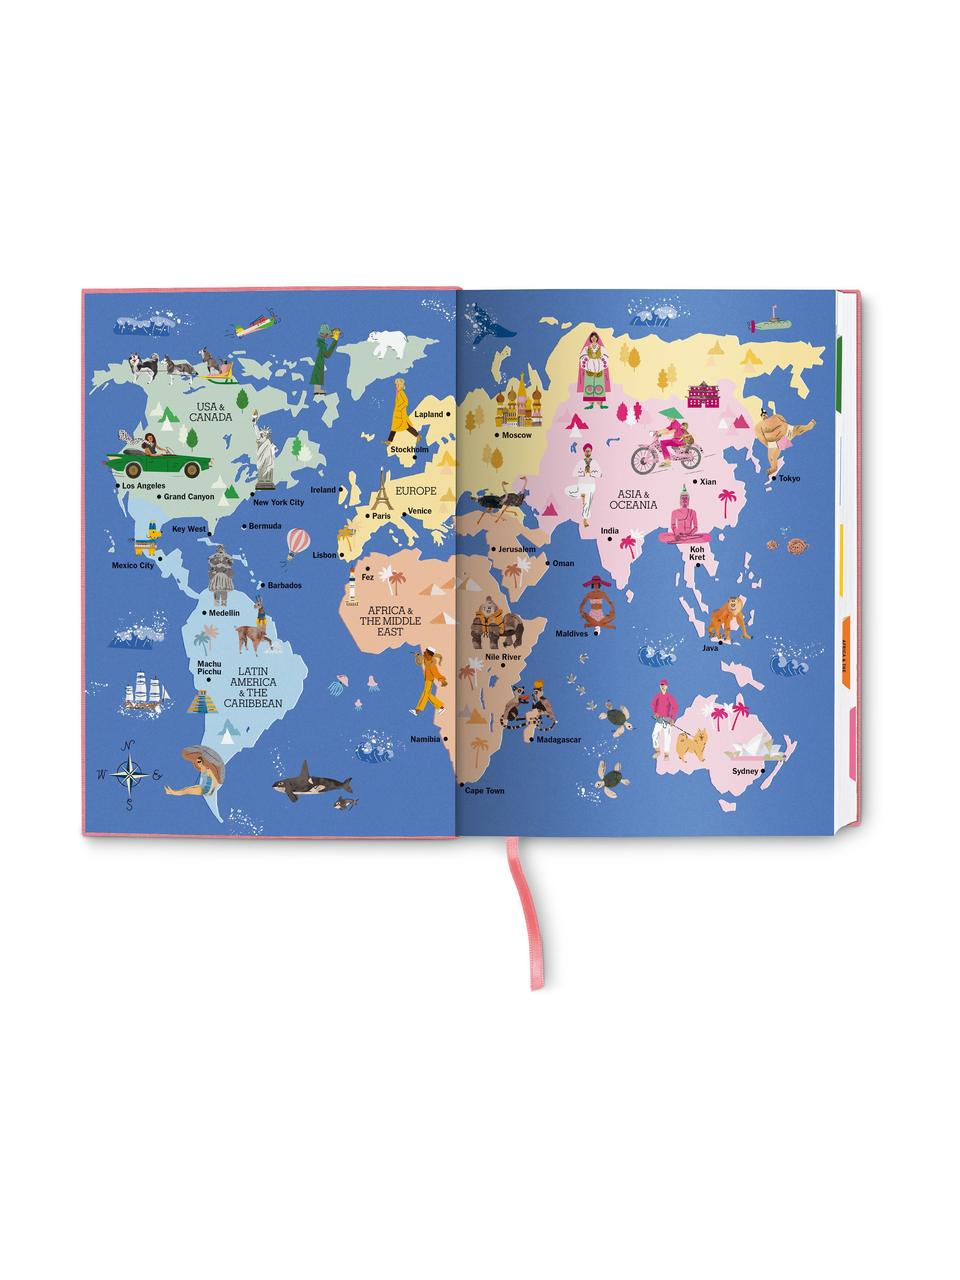 Kniha: The New York Times Explorer. 100 Trips Around the World (Anglicky), Papír, Růžová, více barev, Š 17 cm, D 24 cm